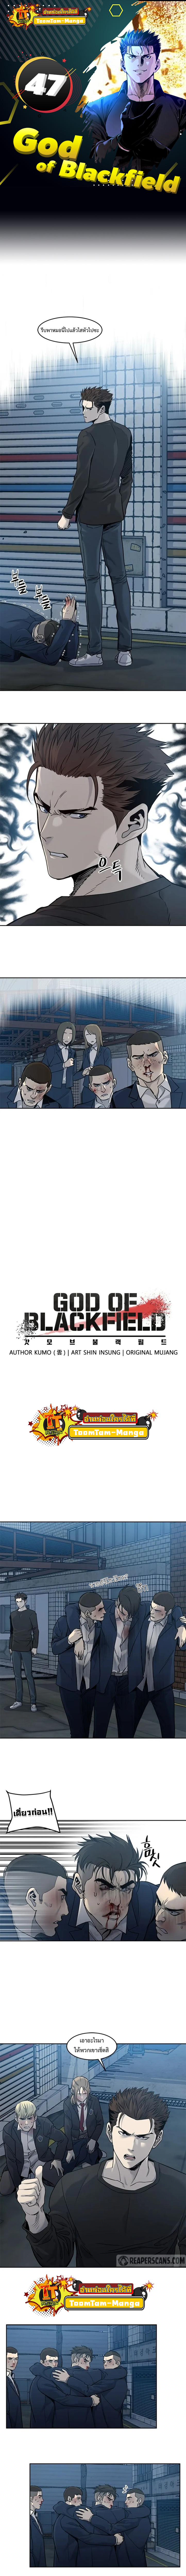 God of Blackfield 47 (1)